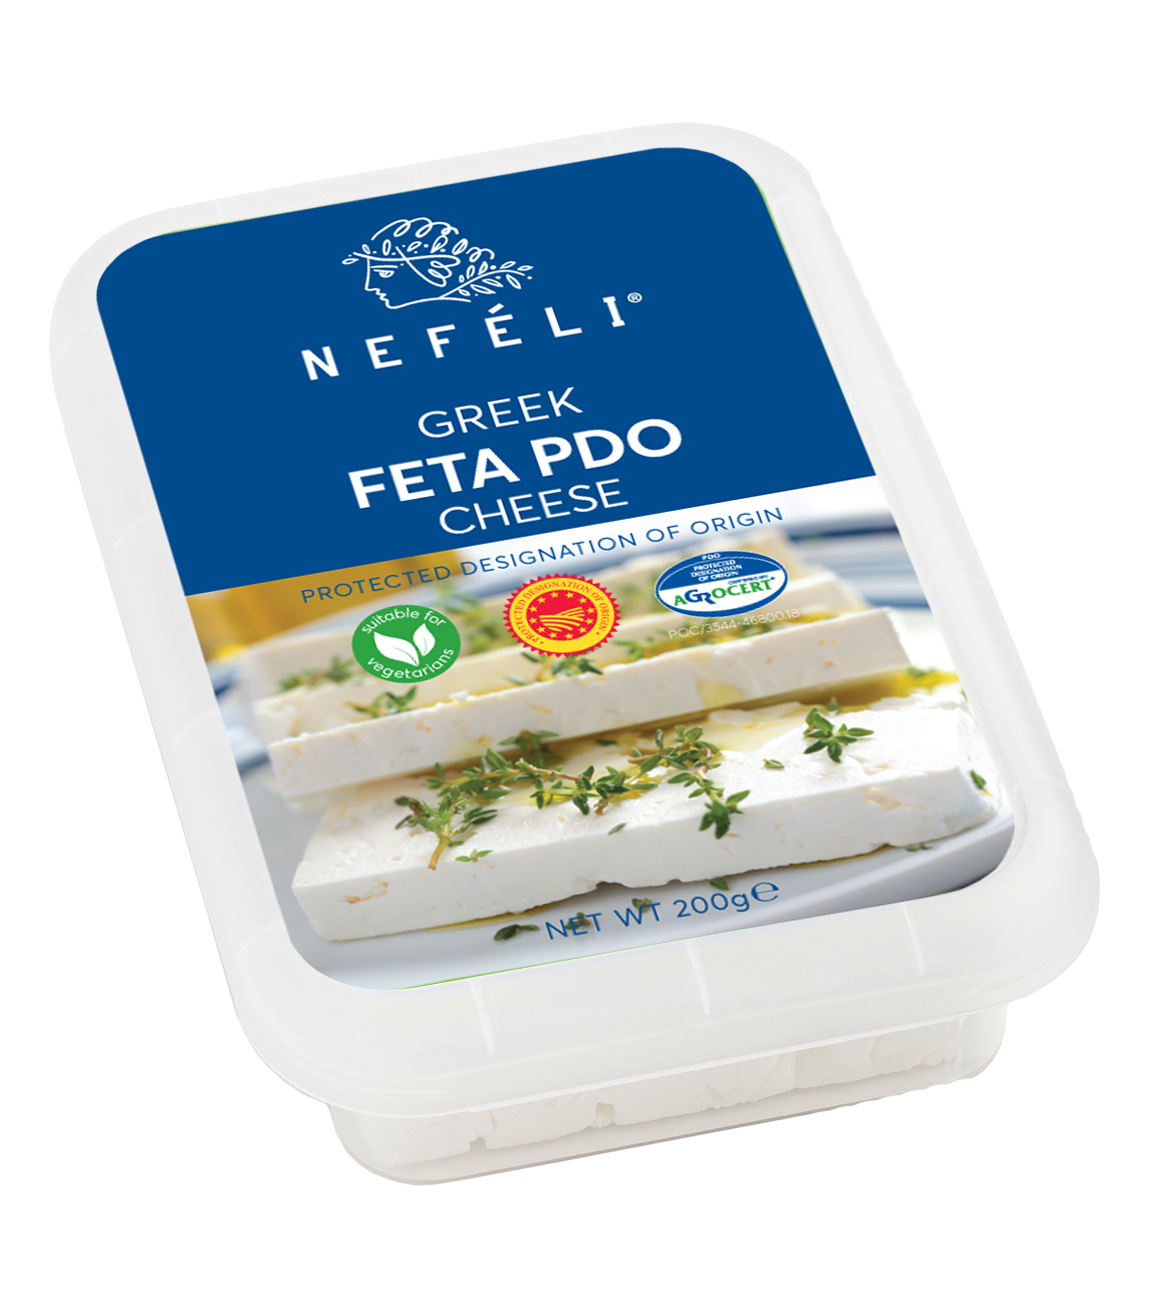 Greek feta PDO cheese suitable for vegetarians!